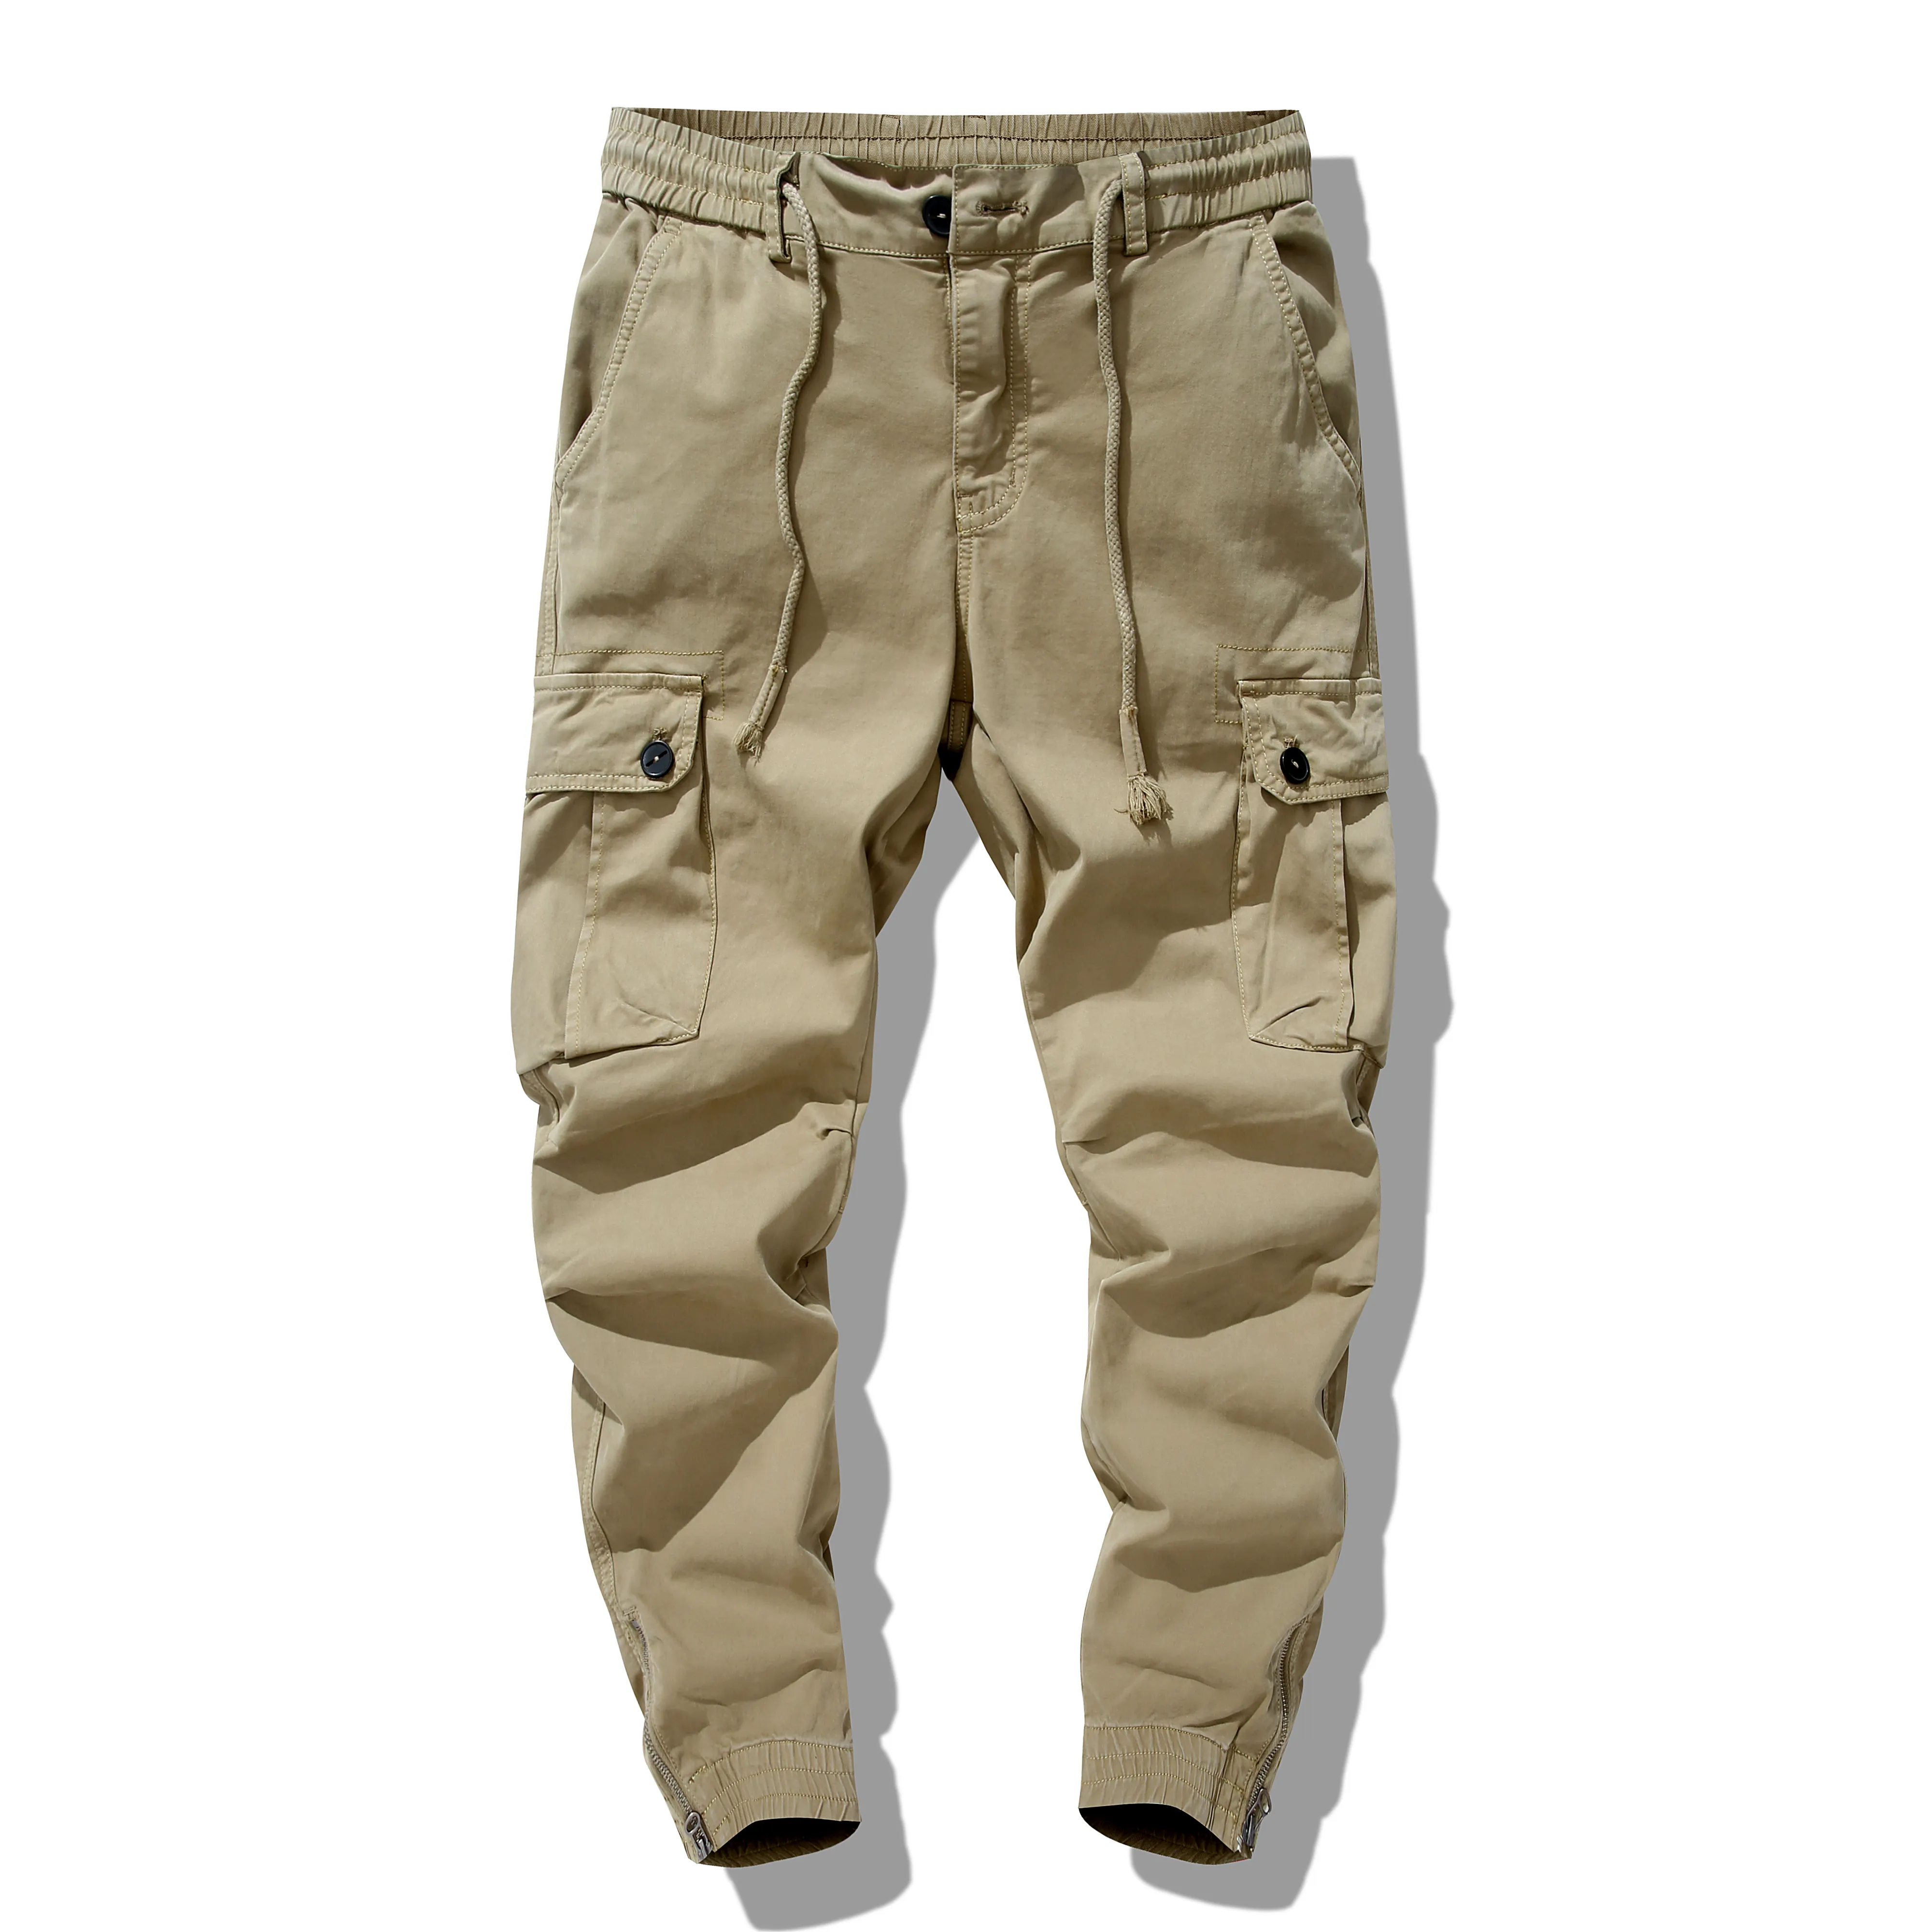 Men's Casual Slim Cotton Spandex Zipper Cargo Pants Hiking Pants